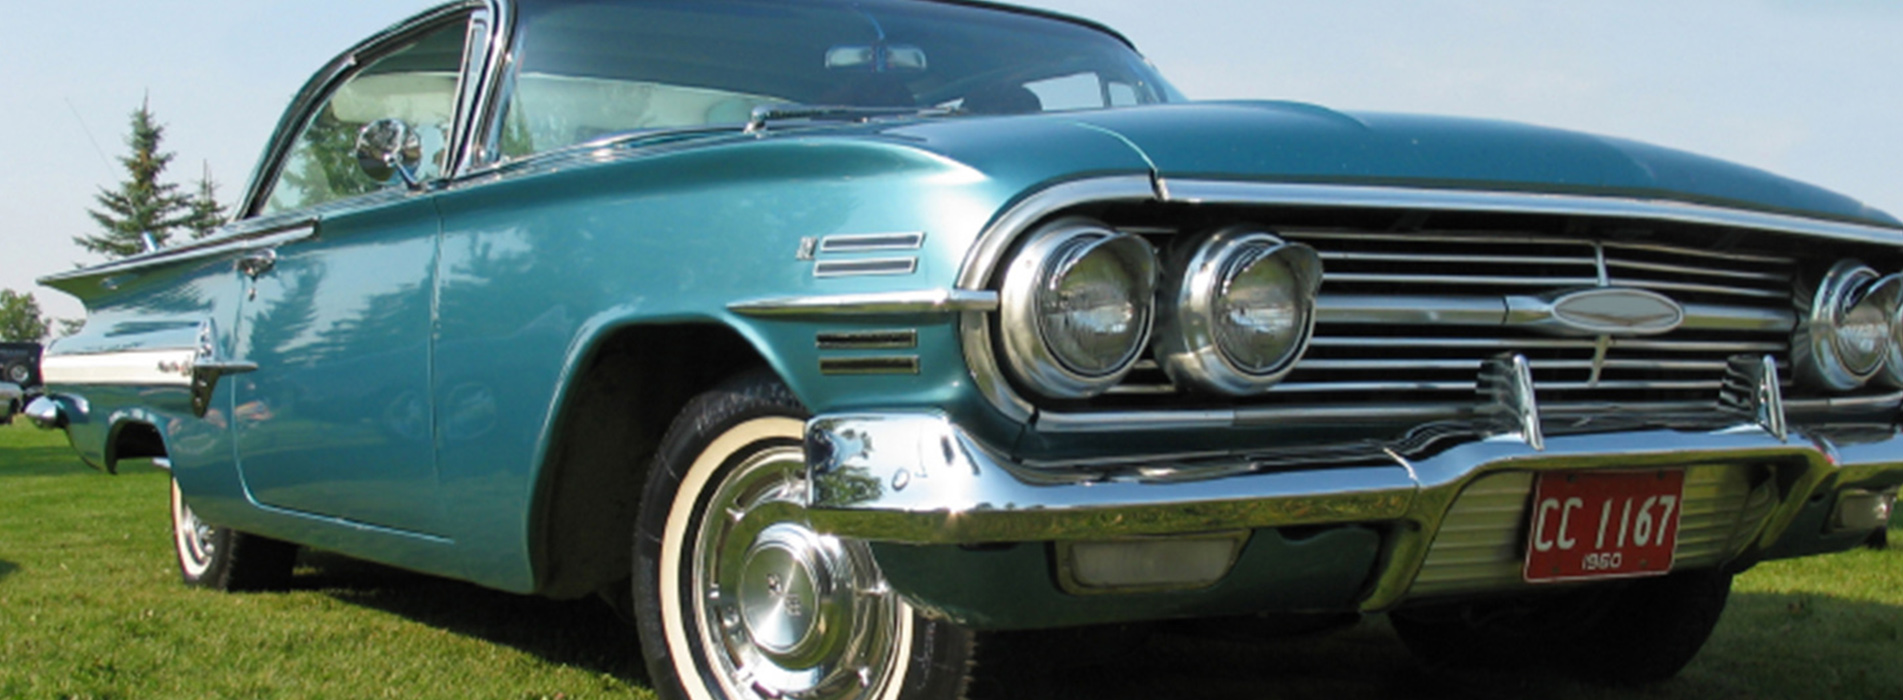 Pennsylvania Classic Car insurance coverage